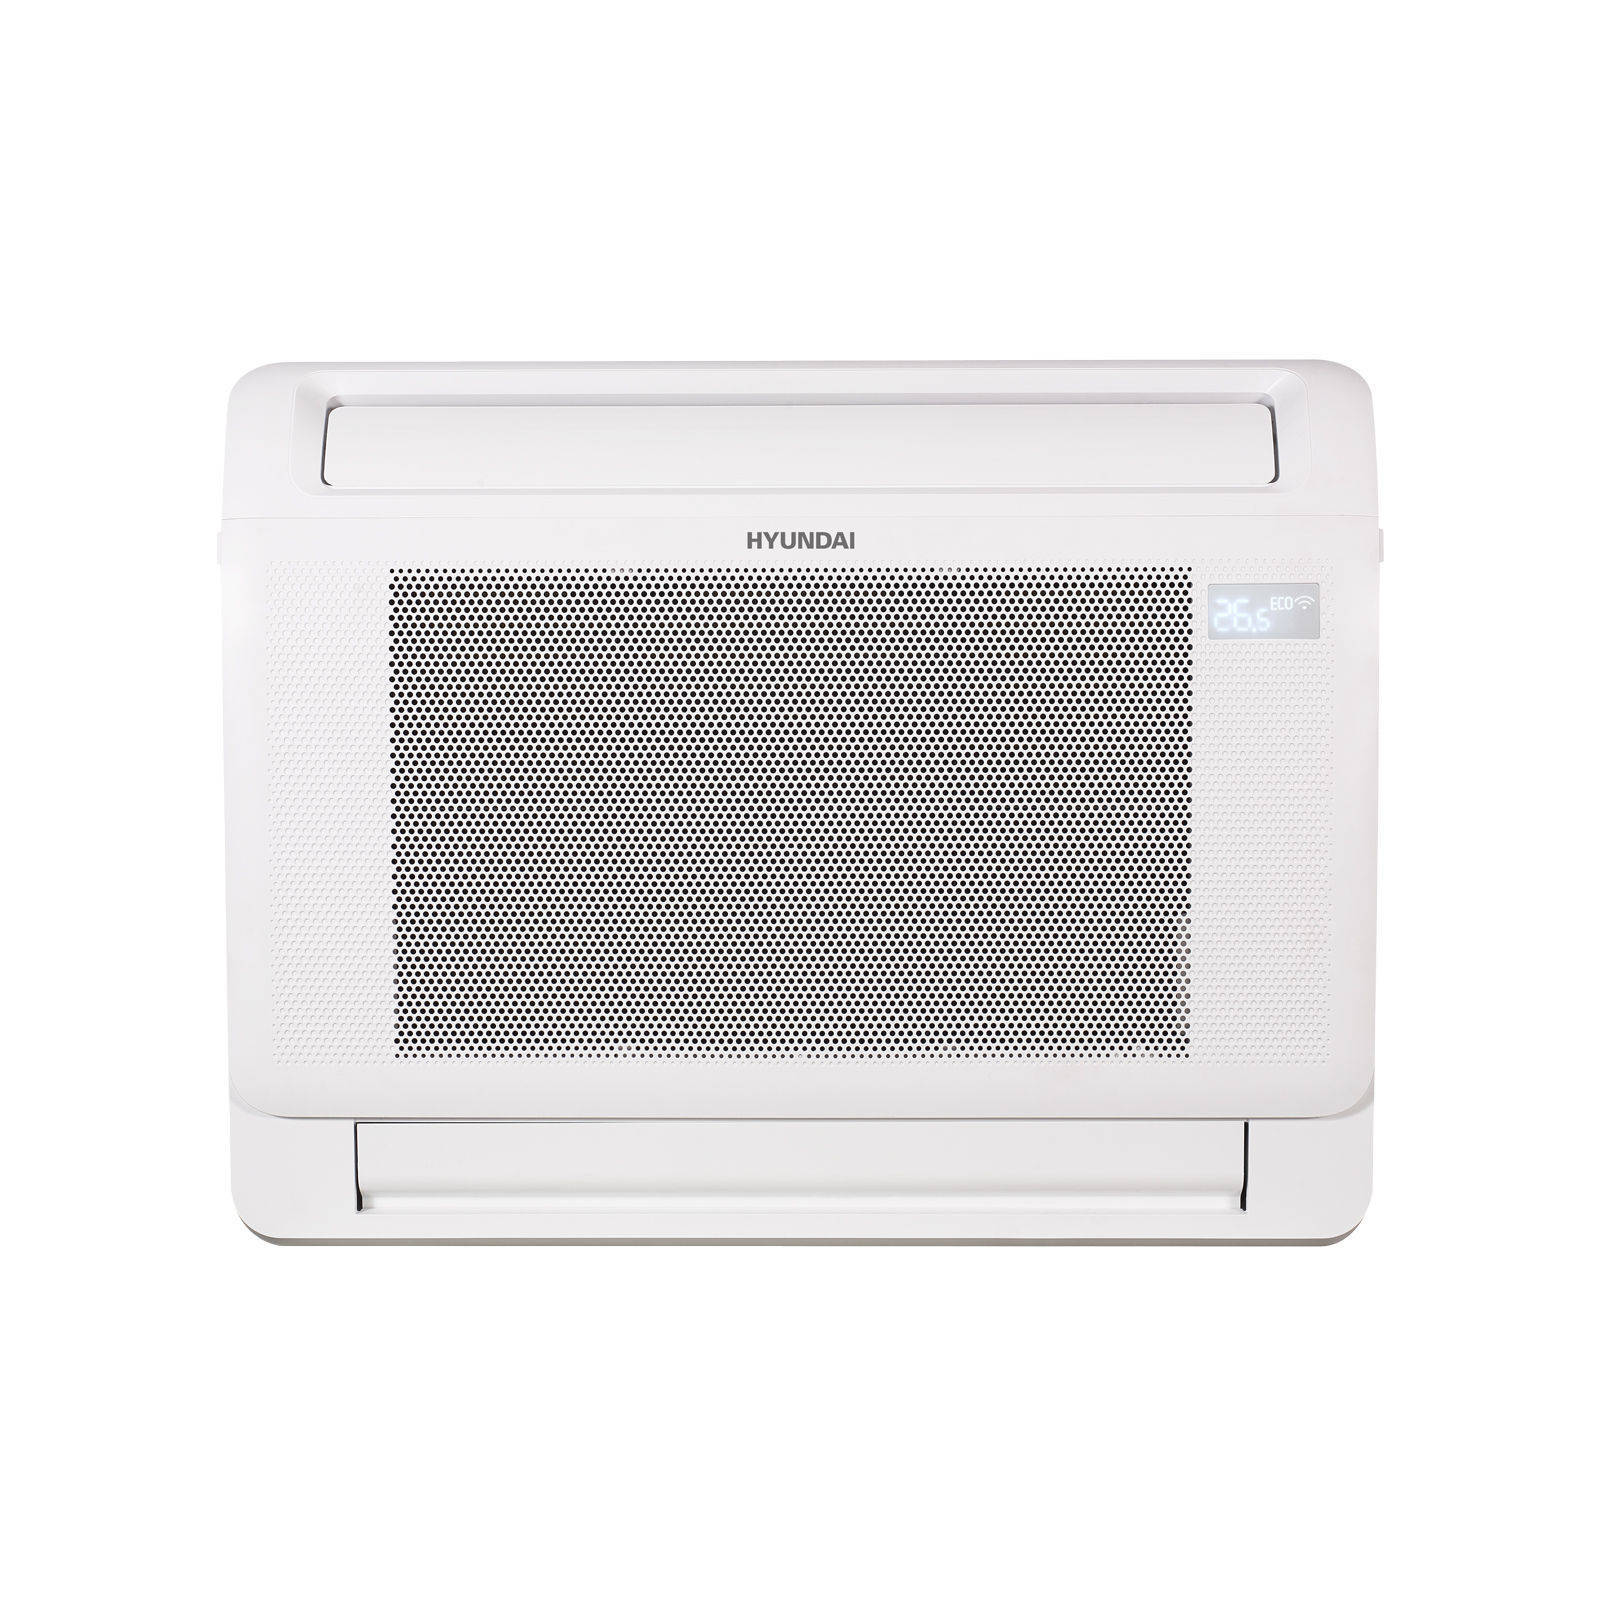 Air conditioner console HYUNDAI 3.5kW